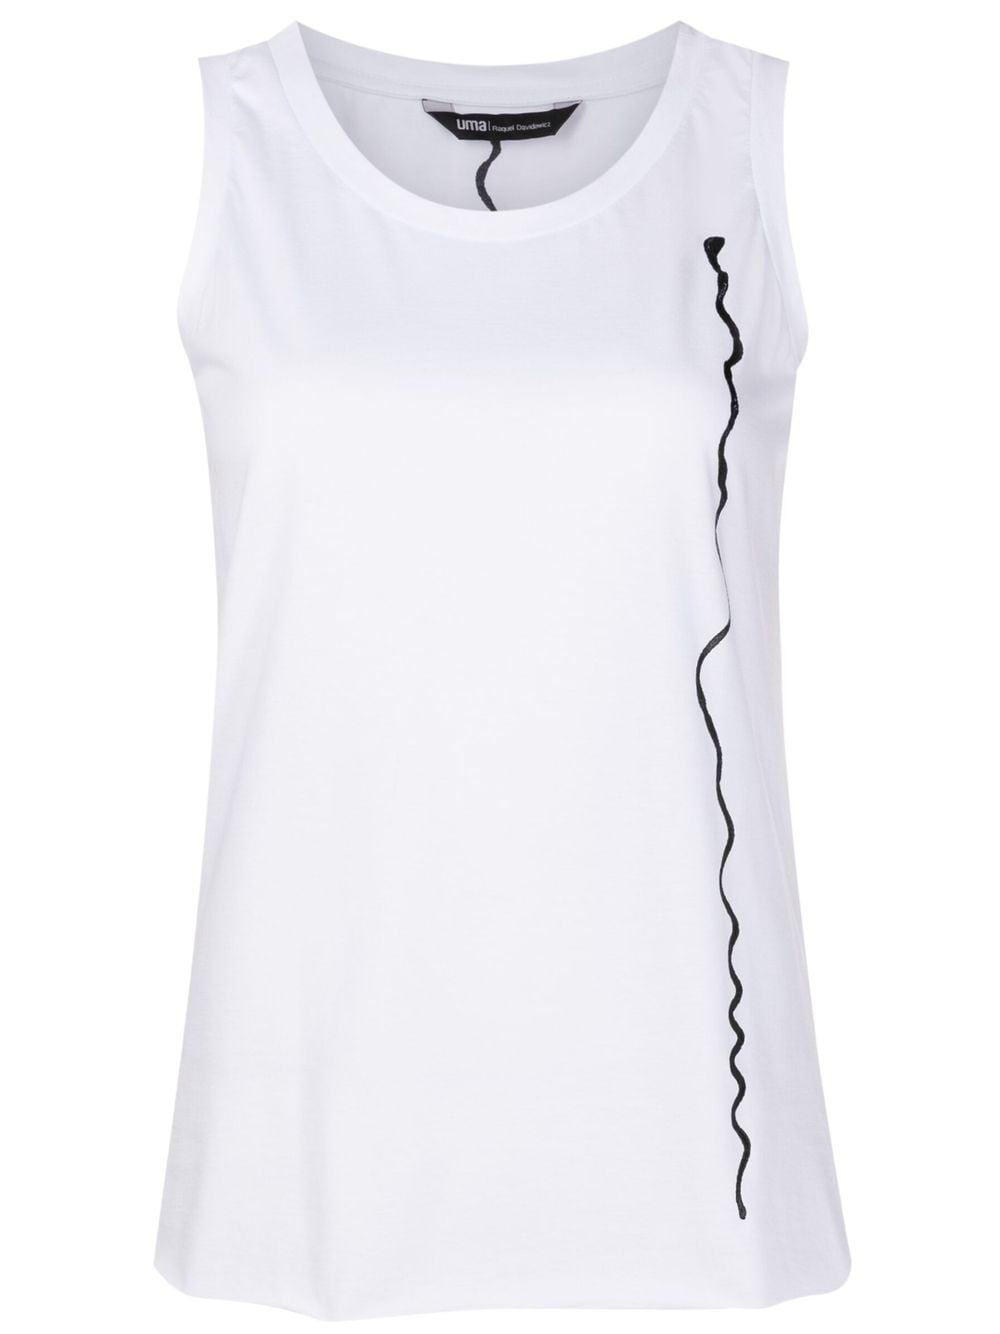 Uma | Raquel Davidowicz abstract-print sleeveless top - White von Uma | Raquel Davidowicz